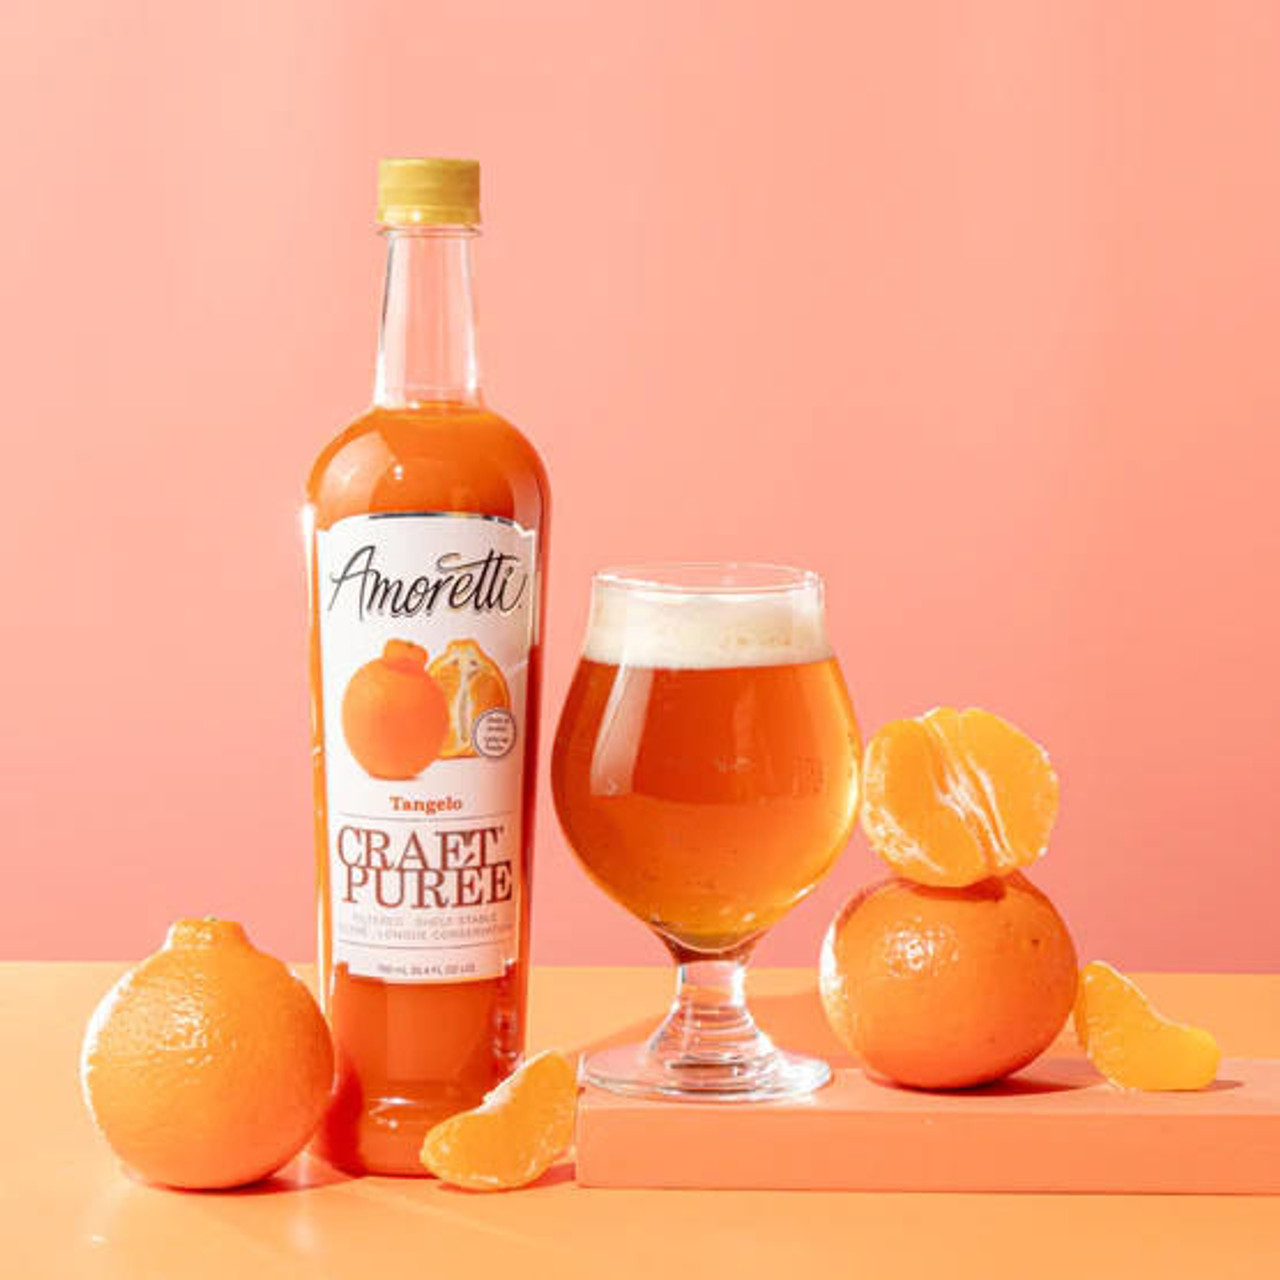 AMORETTI Amoretti Fresh Citrus-Y Essence of Tangelo Craft Puree 1 Gallon 